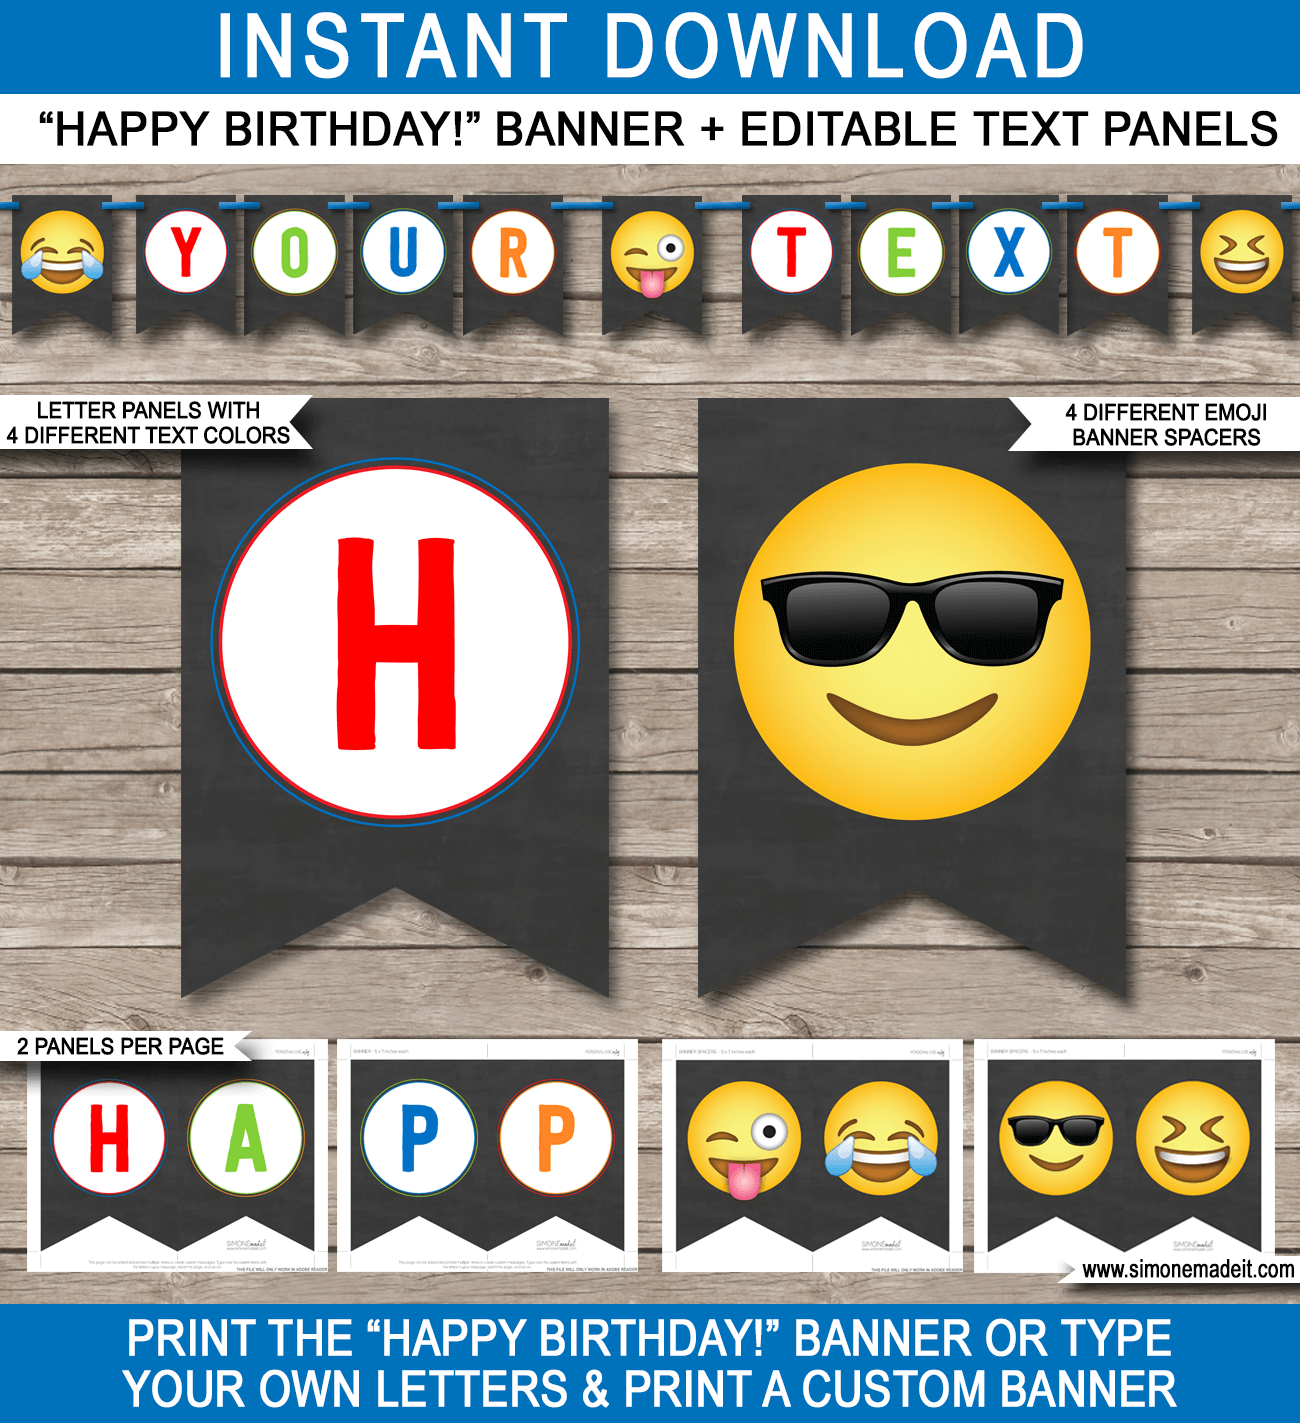 Boys Emoji Printable Banner Template - Emoji Theme Bunting - Happy Birthday Banner - Birthday Party - Editable DIY Template - INSTANT DOWNLOAD via simonemadeit.com